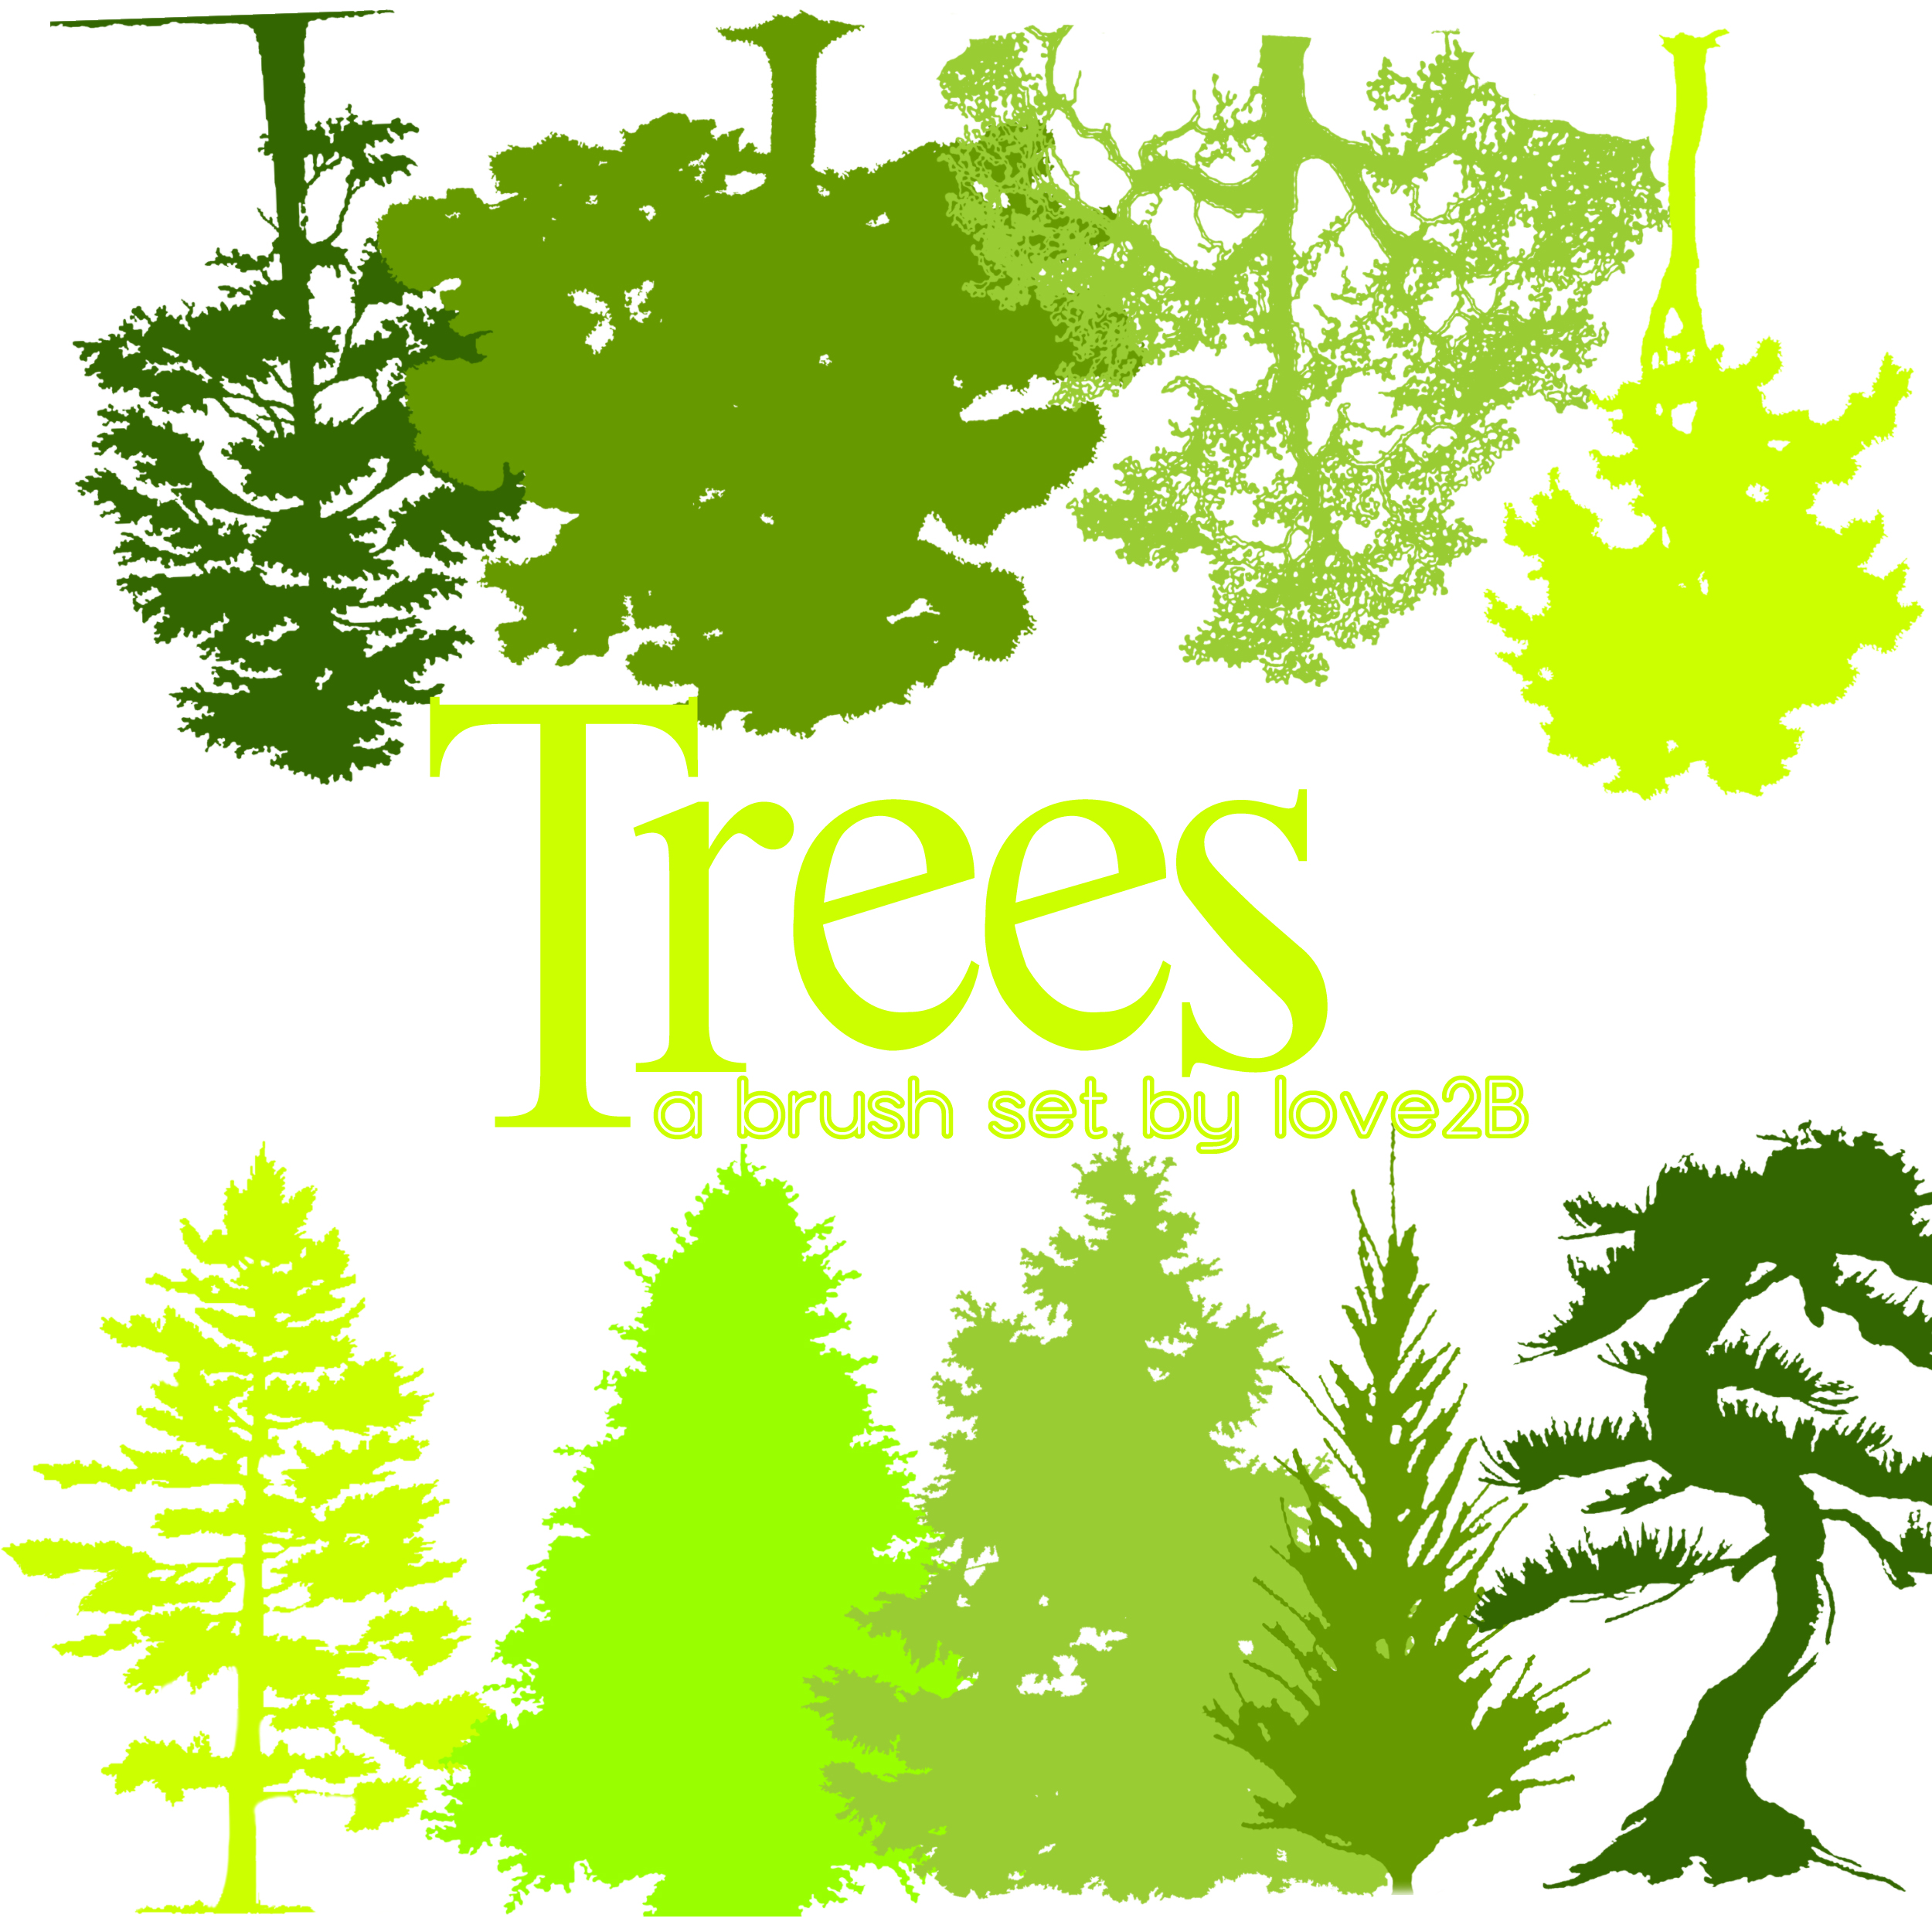 adobe photoshop cs3 tree brushes free download